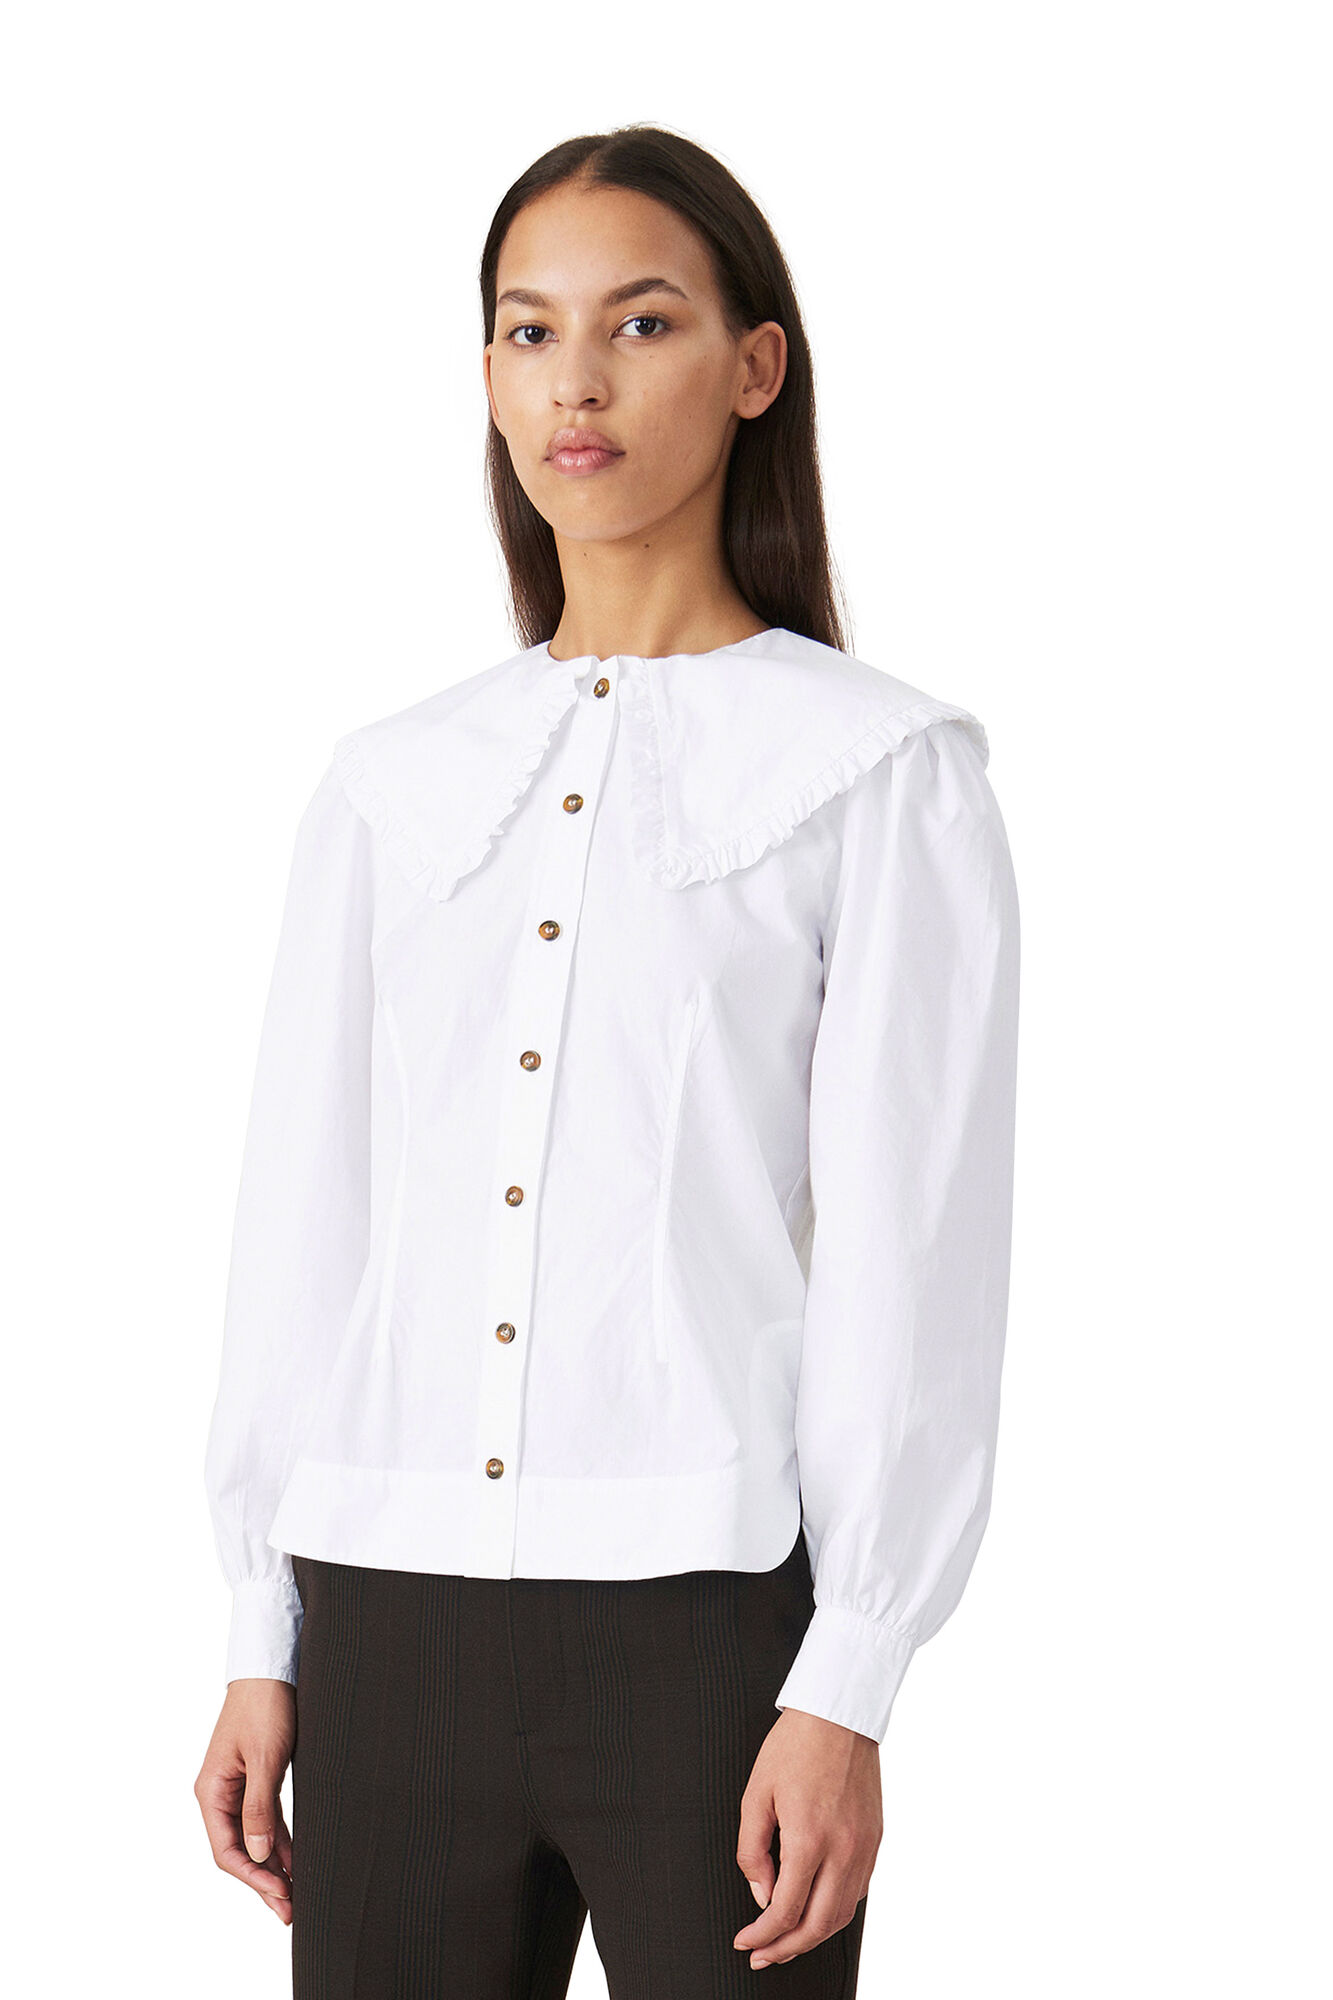 Cotton Poplin Fitted Shirt, Cotton, in colour Bright White - 1 - GANNI